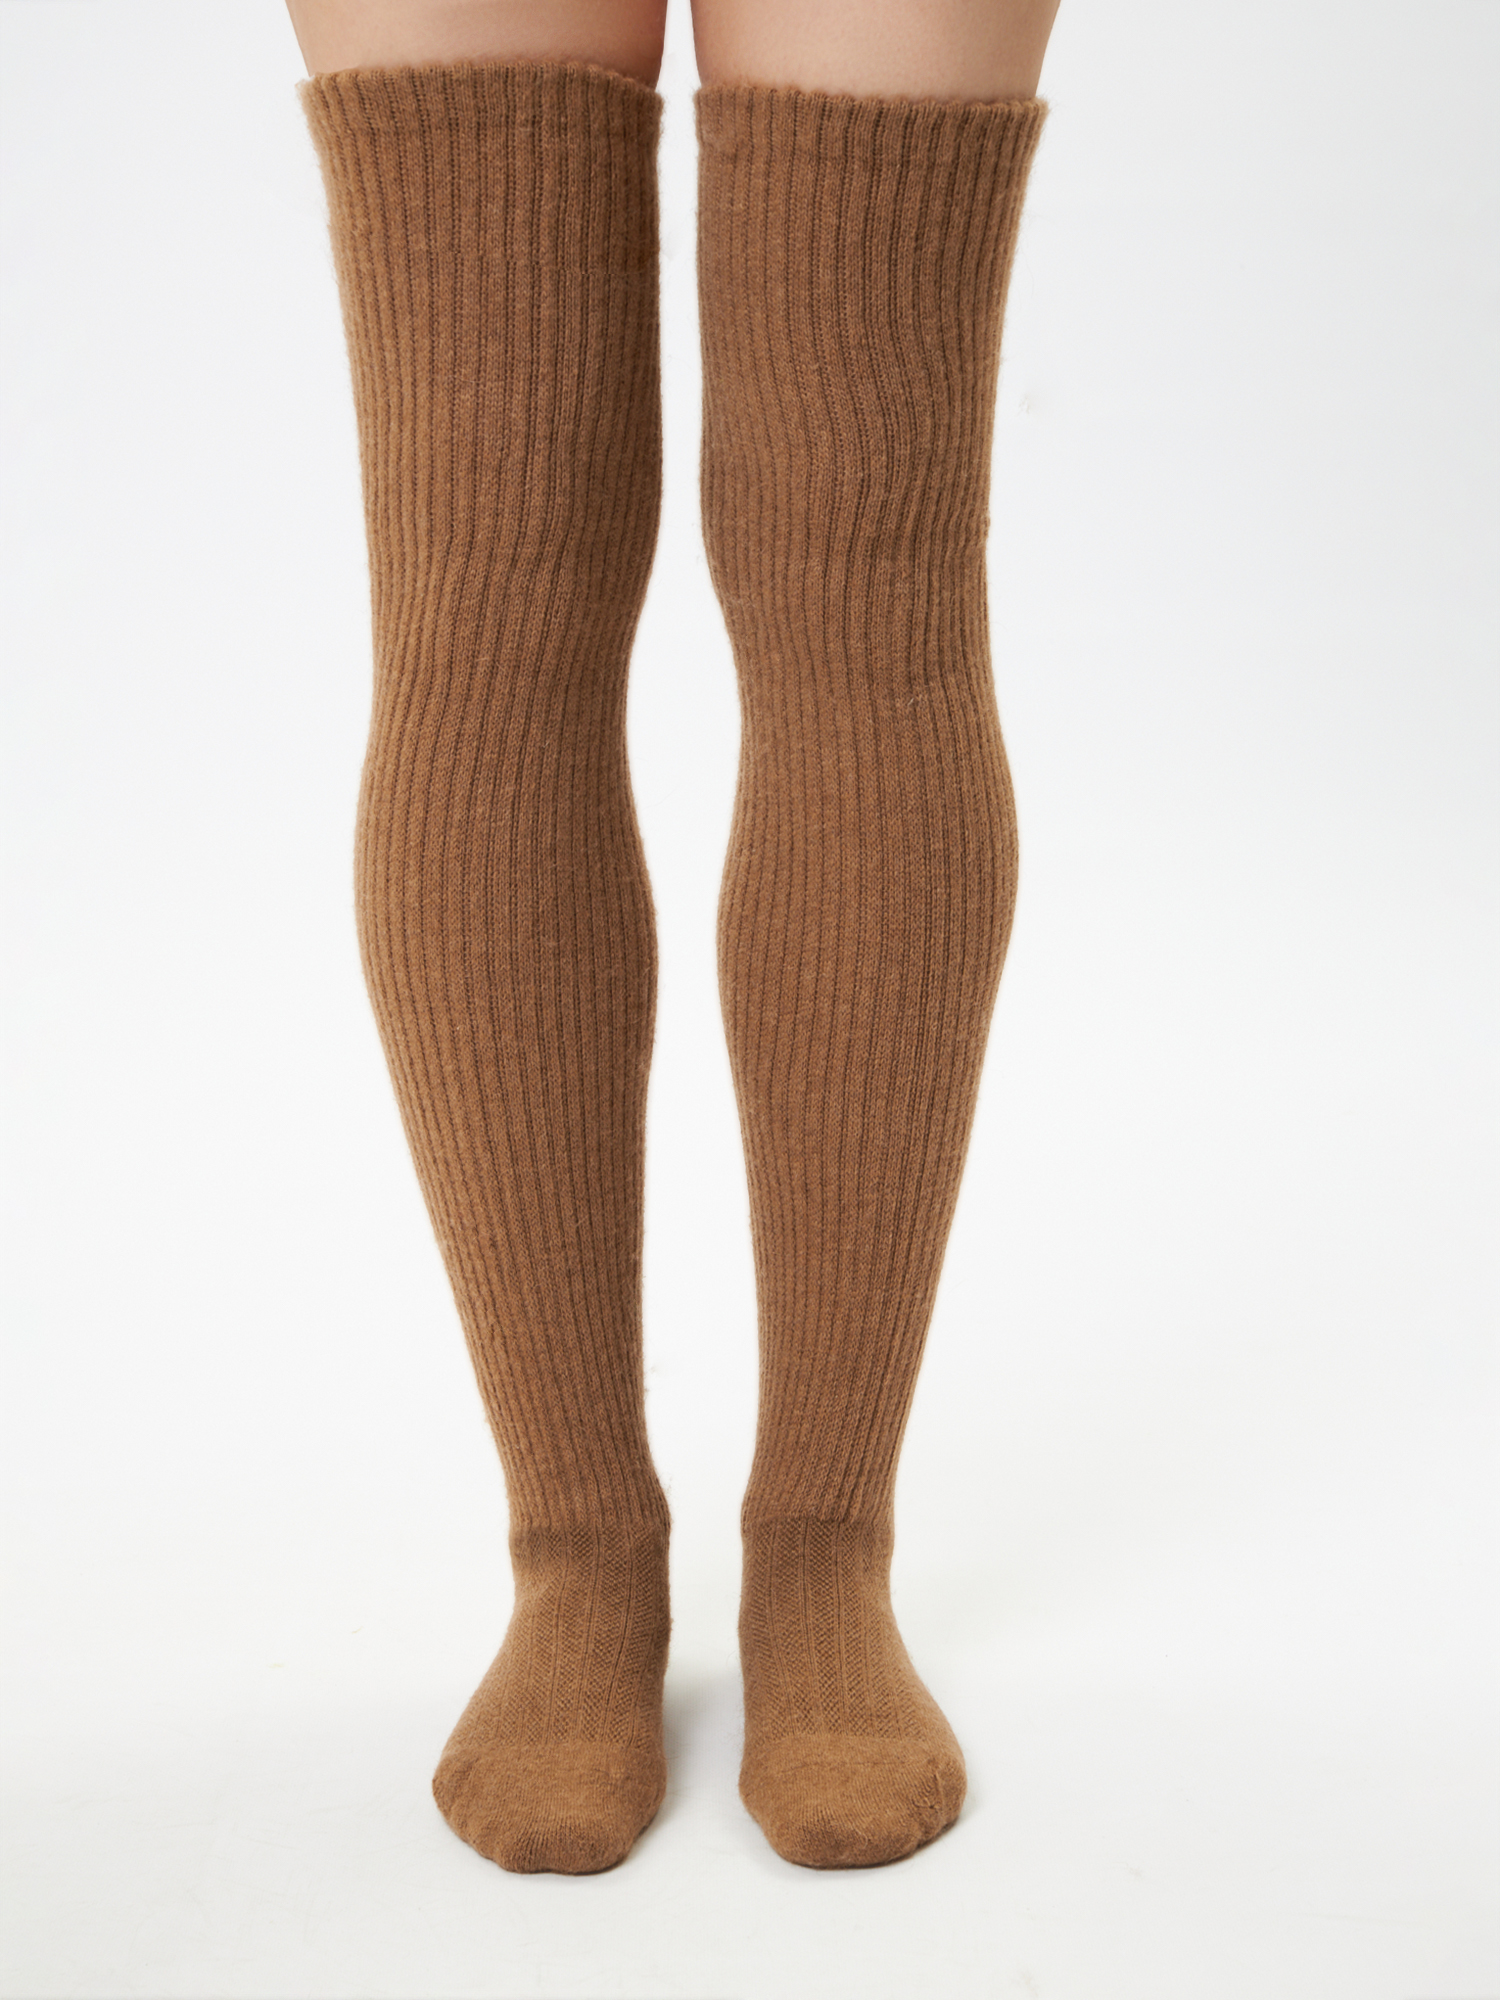 Гольфины женские Wool Spirit by Khan.Cashmere Tall коричневые 37-39